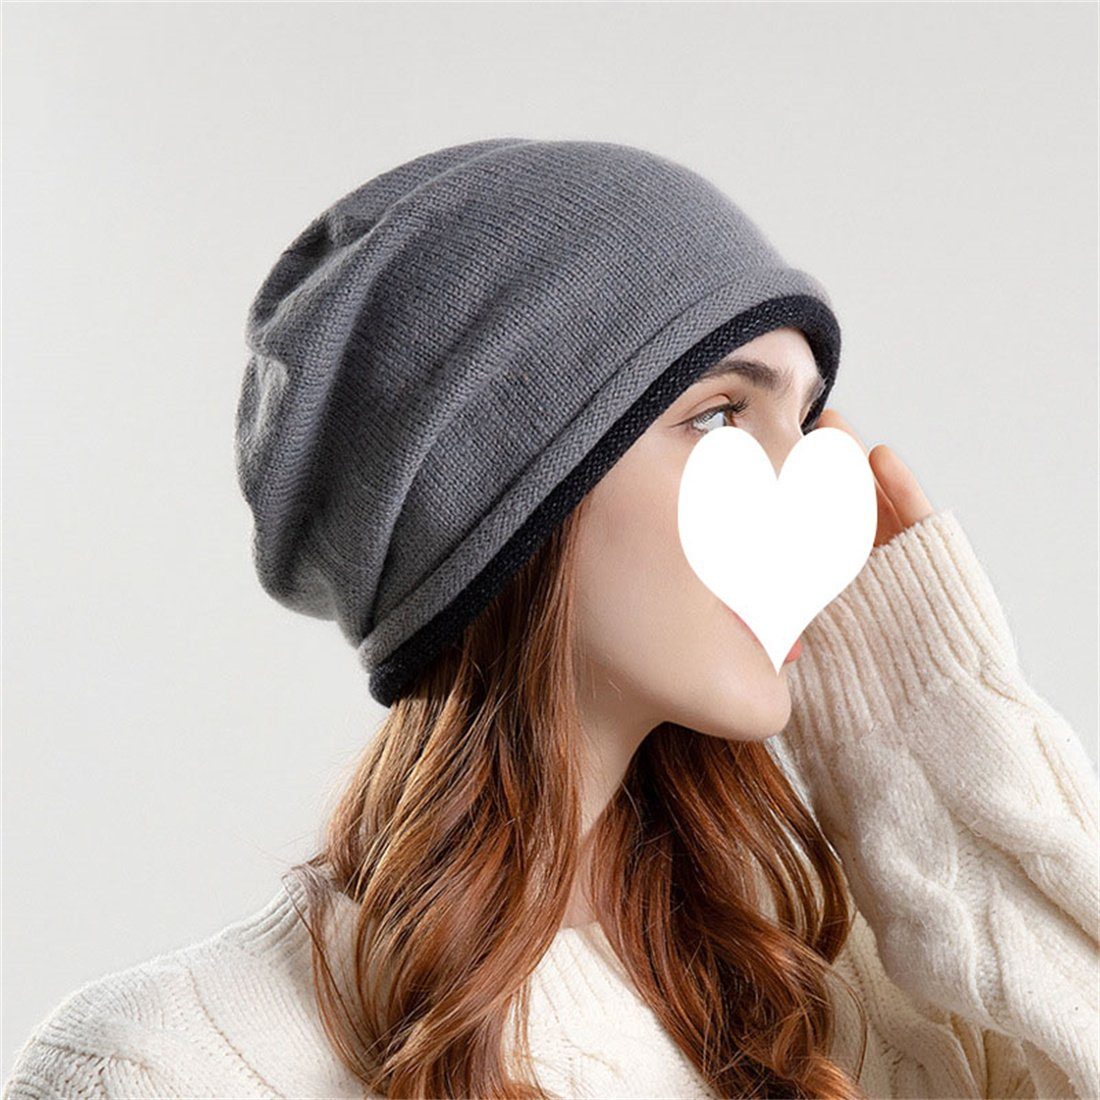 DÖRÖY Strickmütze Unisex Winter warme Strickmütze,Ohrenschutz Kopfmütze,gestapelte Mütze Grau